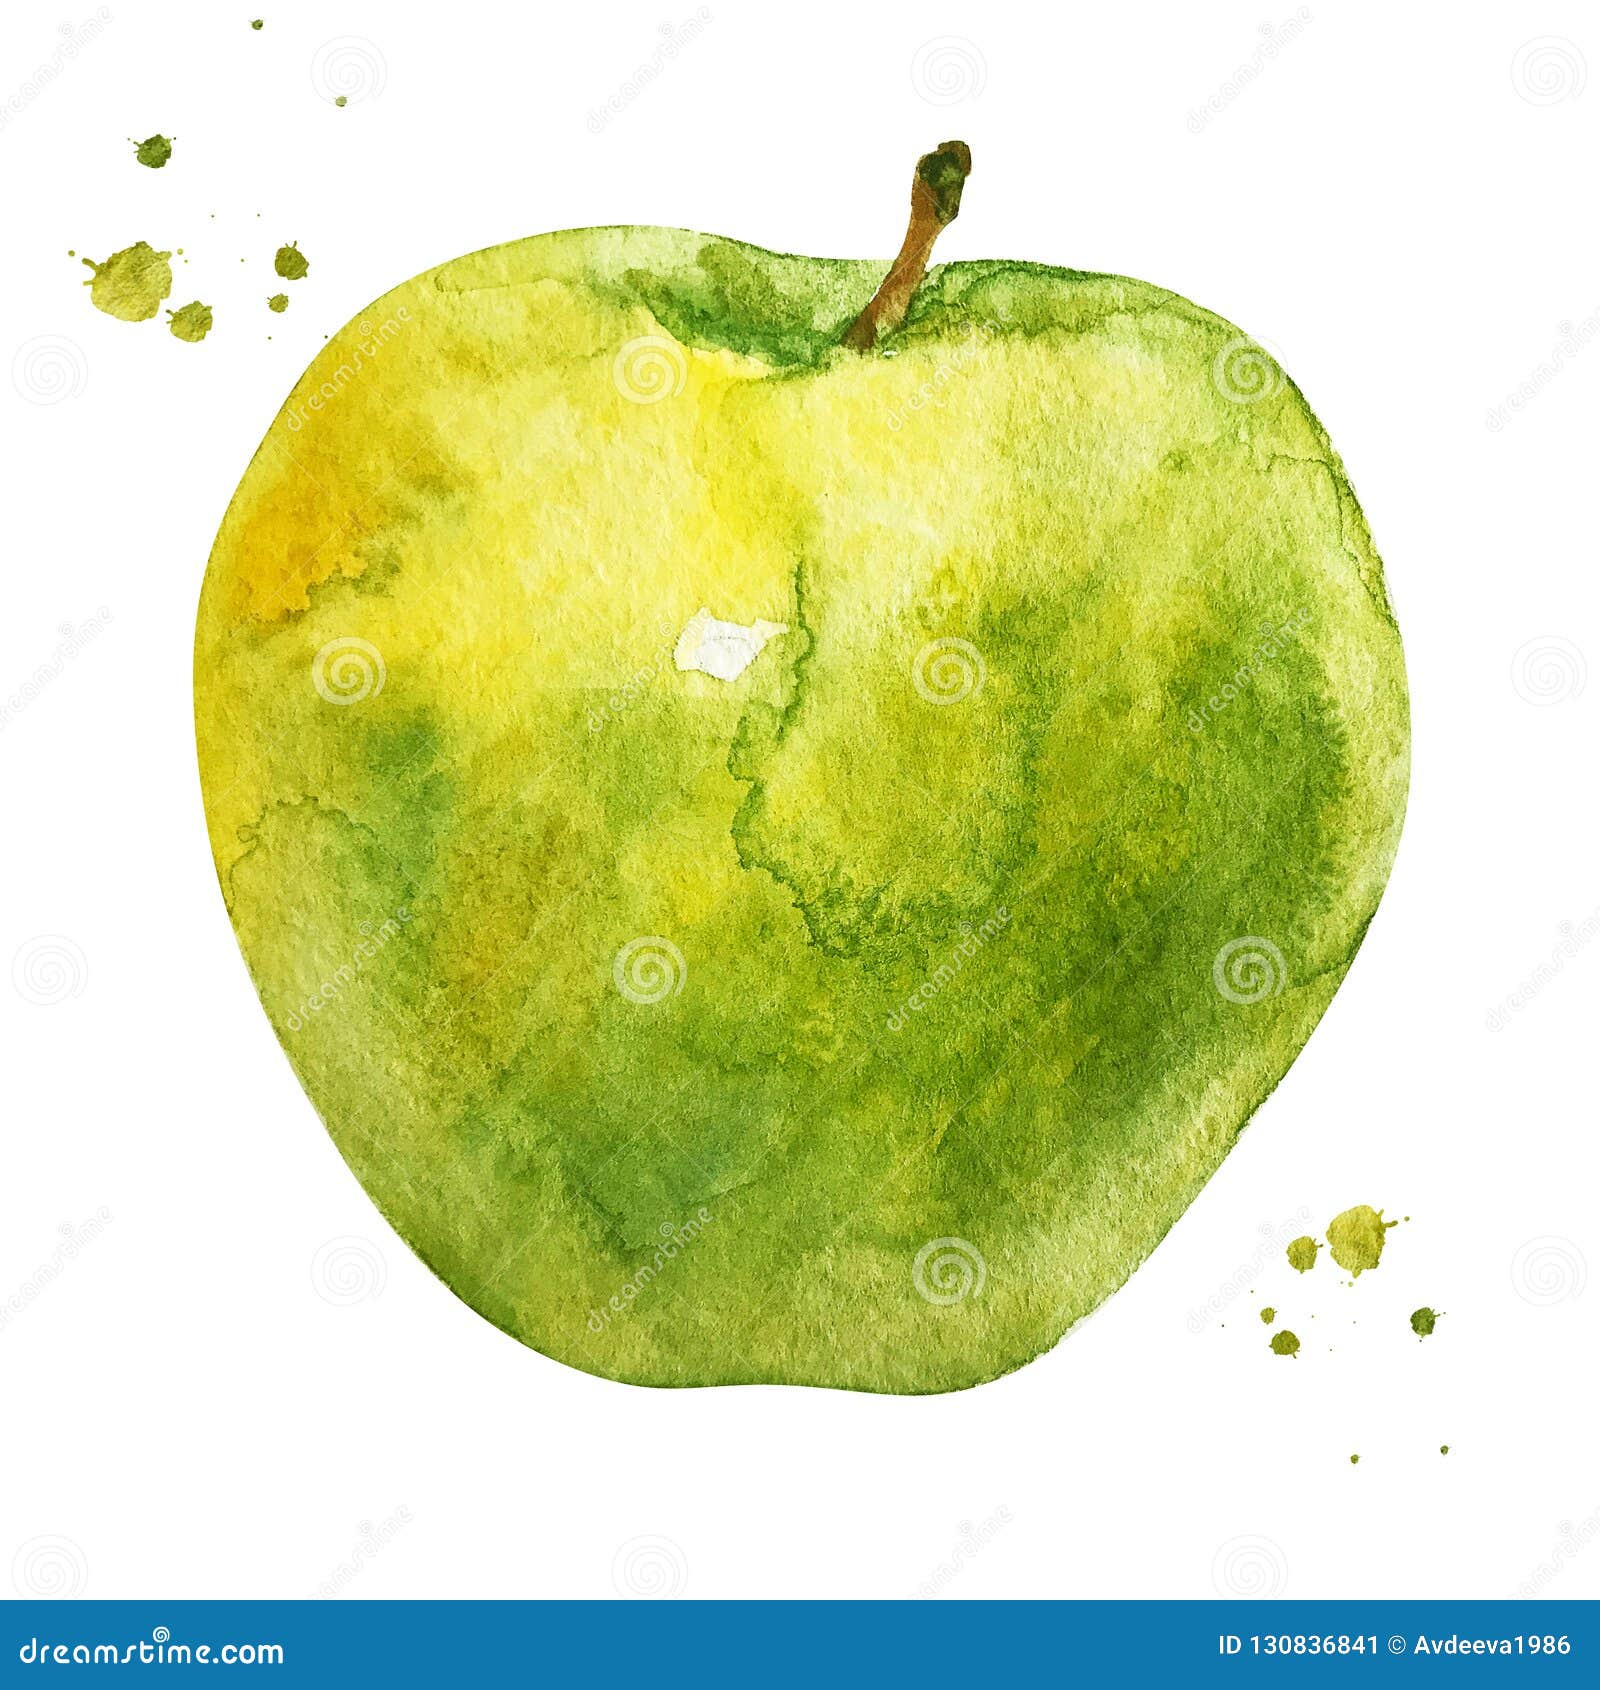 painting Green apples watercolor illustration fresh fruits digital